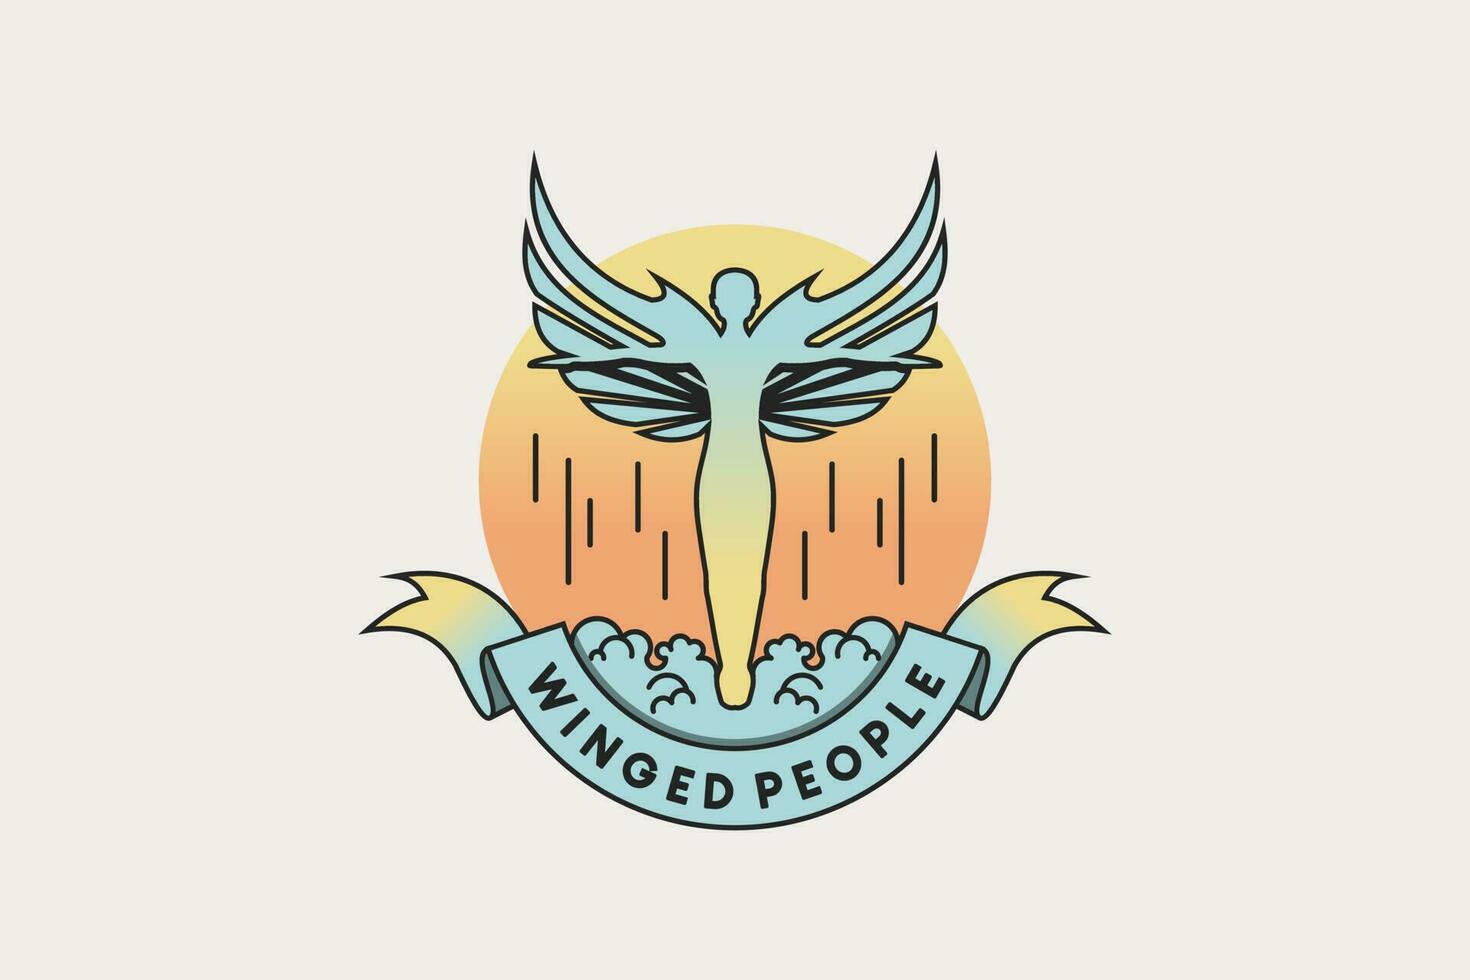 Creative abstract vintage winged man logo design vector